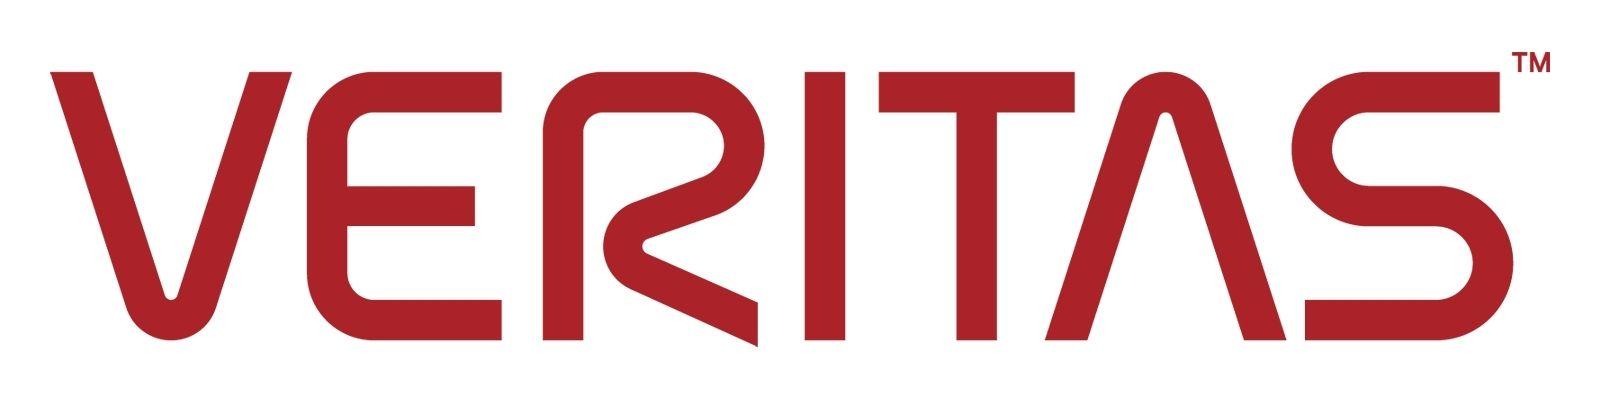 Symantec Corporation Logo - Symantec Selects Veritas Technologies Corporation as the Name